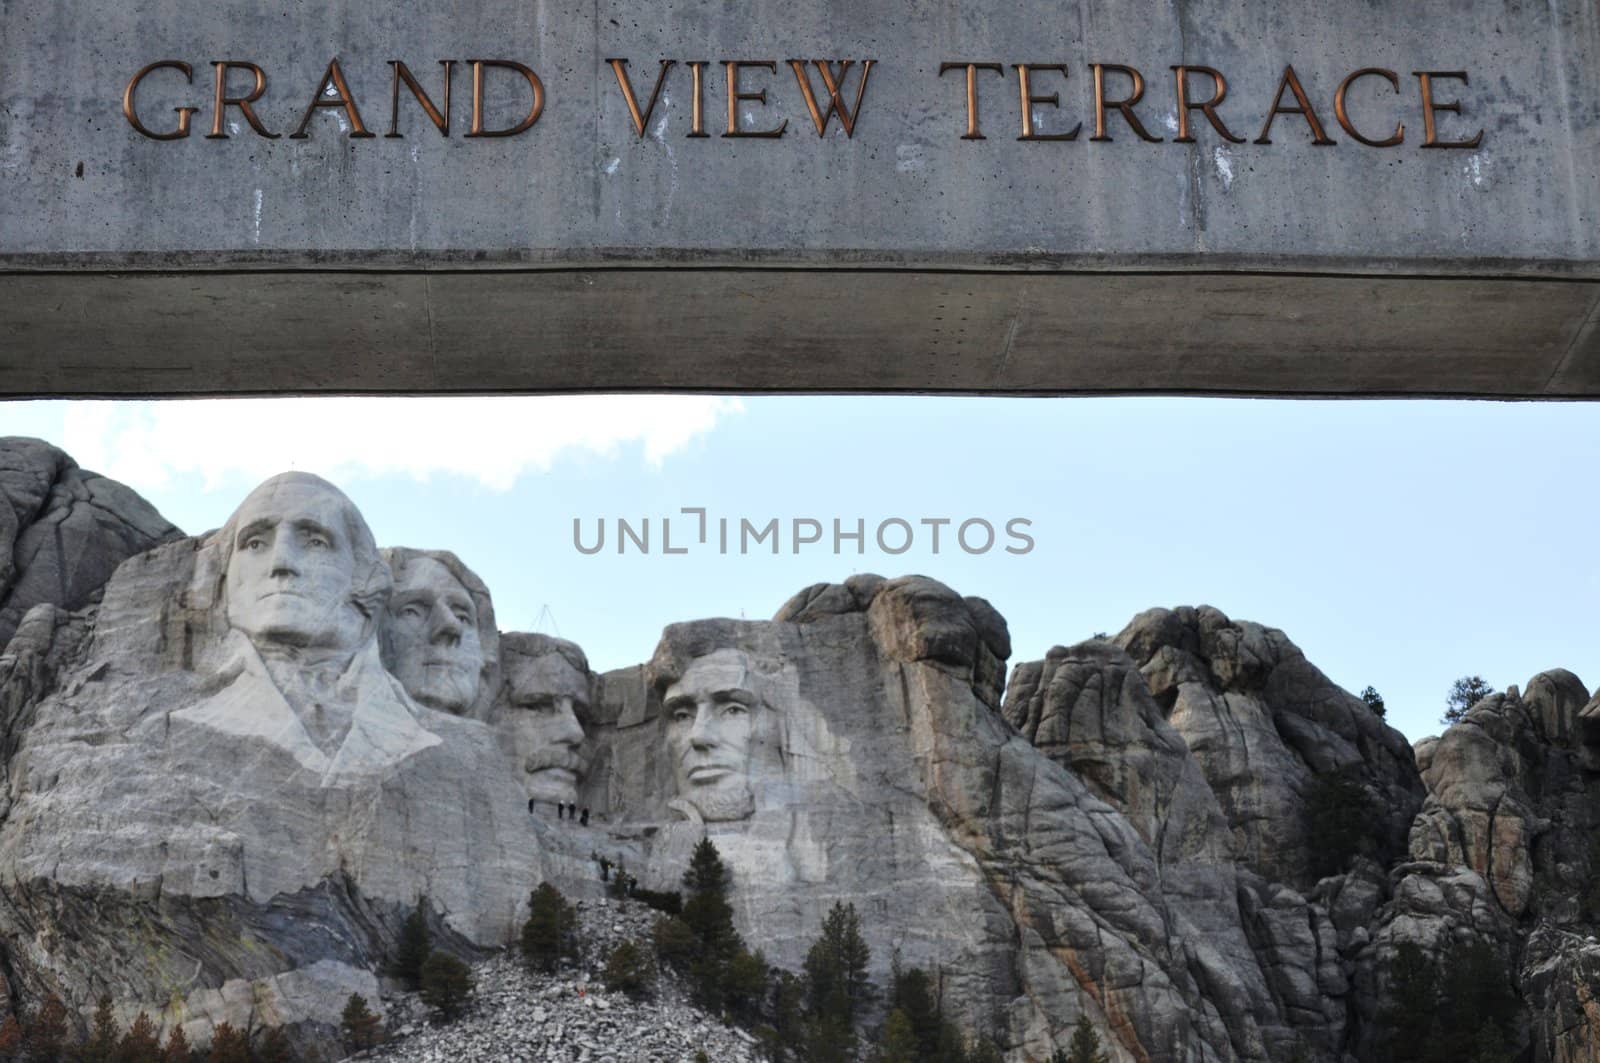 Mount Rushmore South Dakota by RefocusPhoto